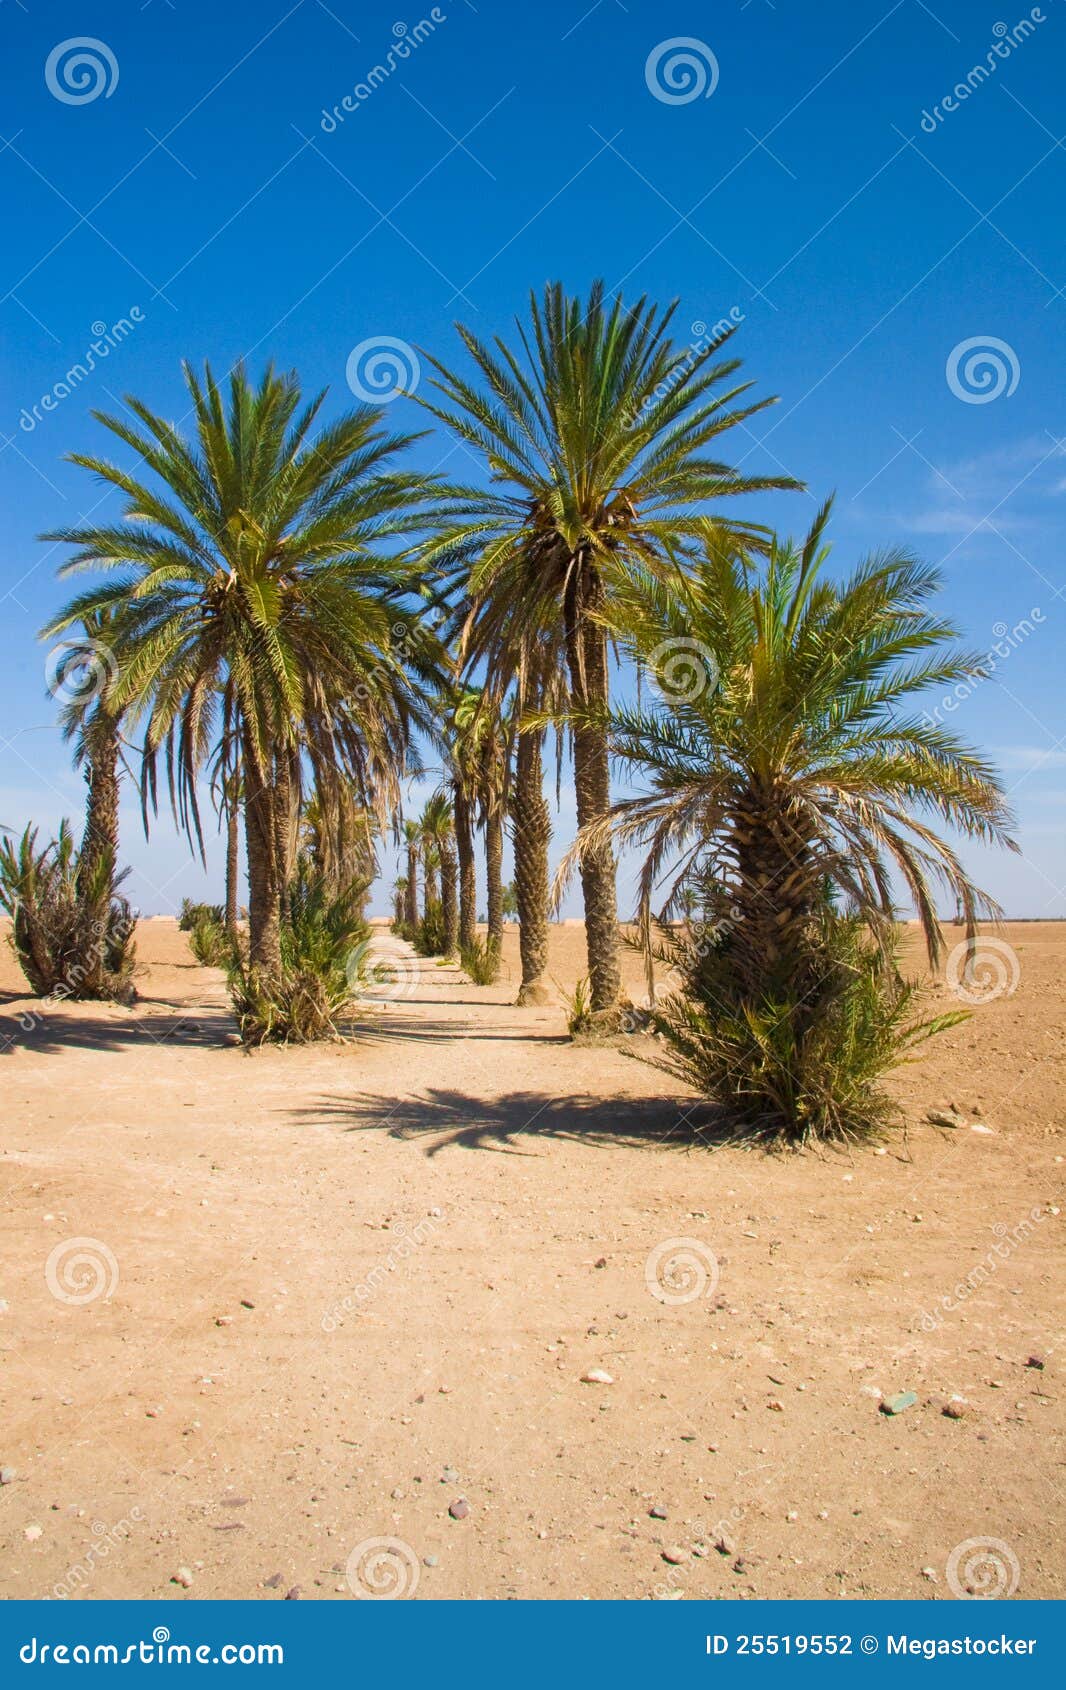 Palm desert steam фото 95